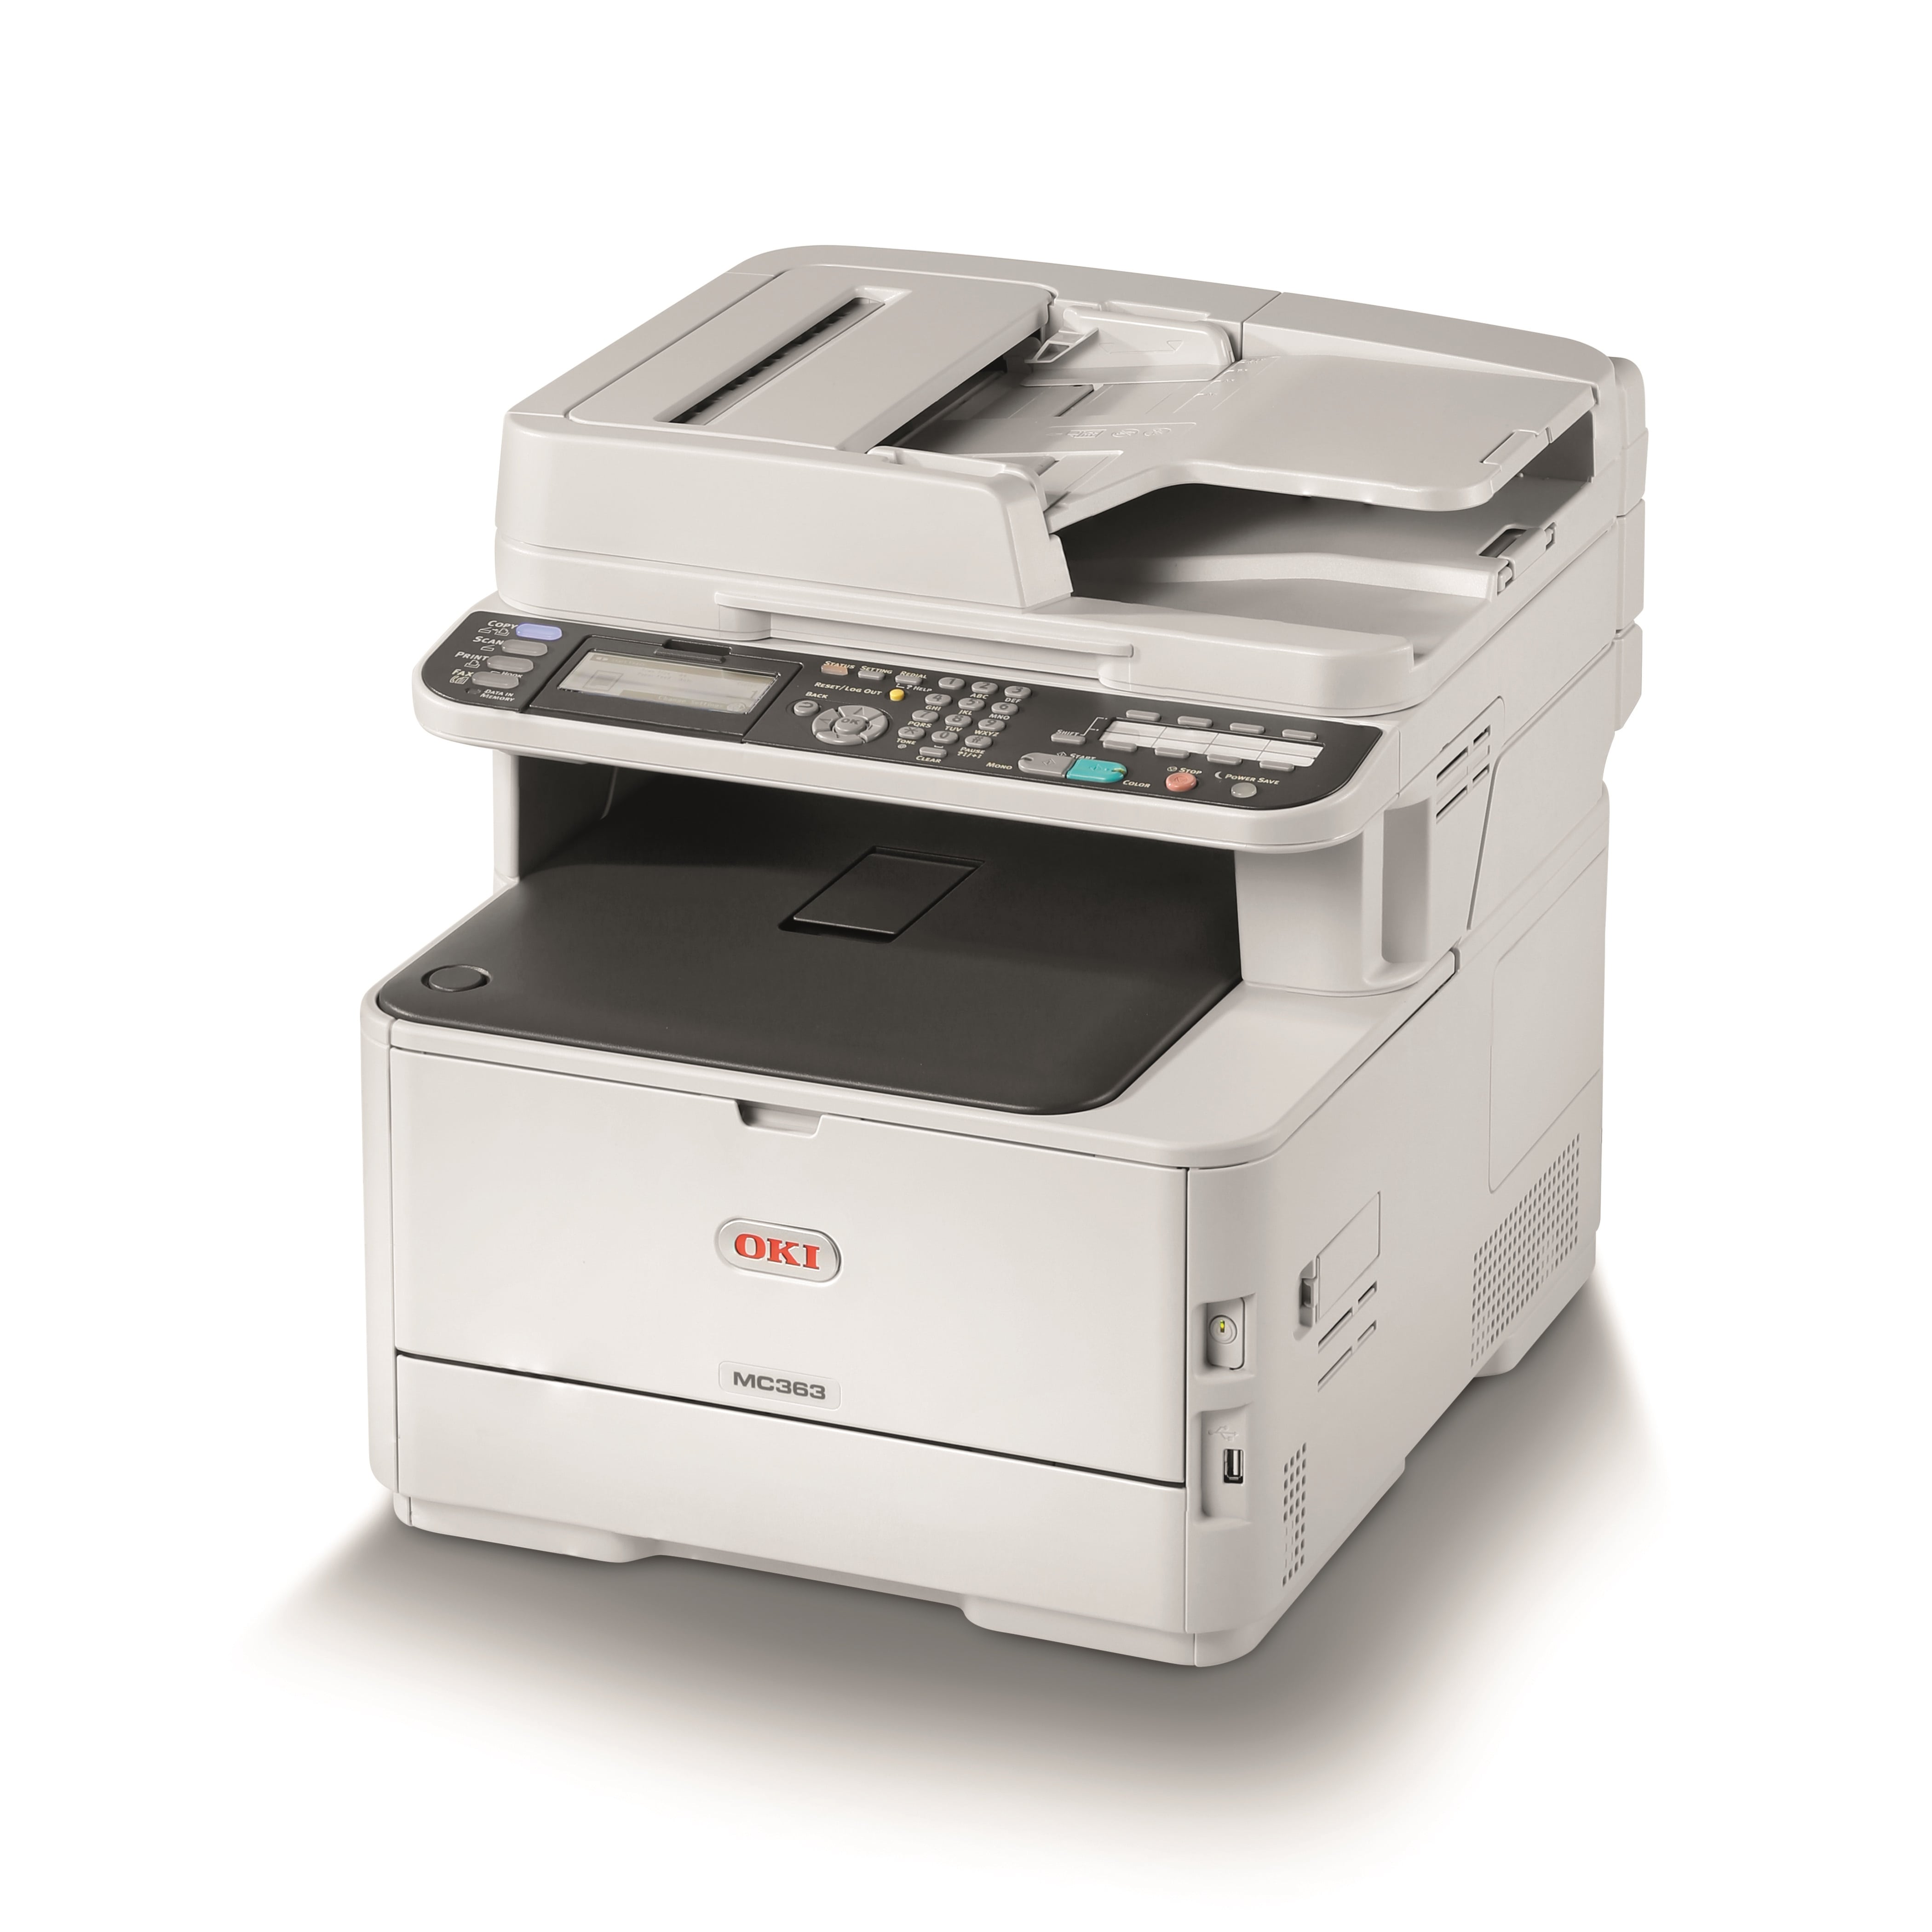 OKI MC363 Multifunction Printer Accessories